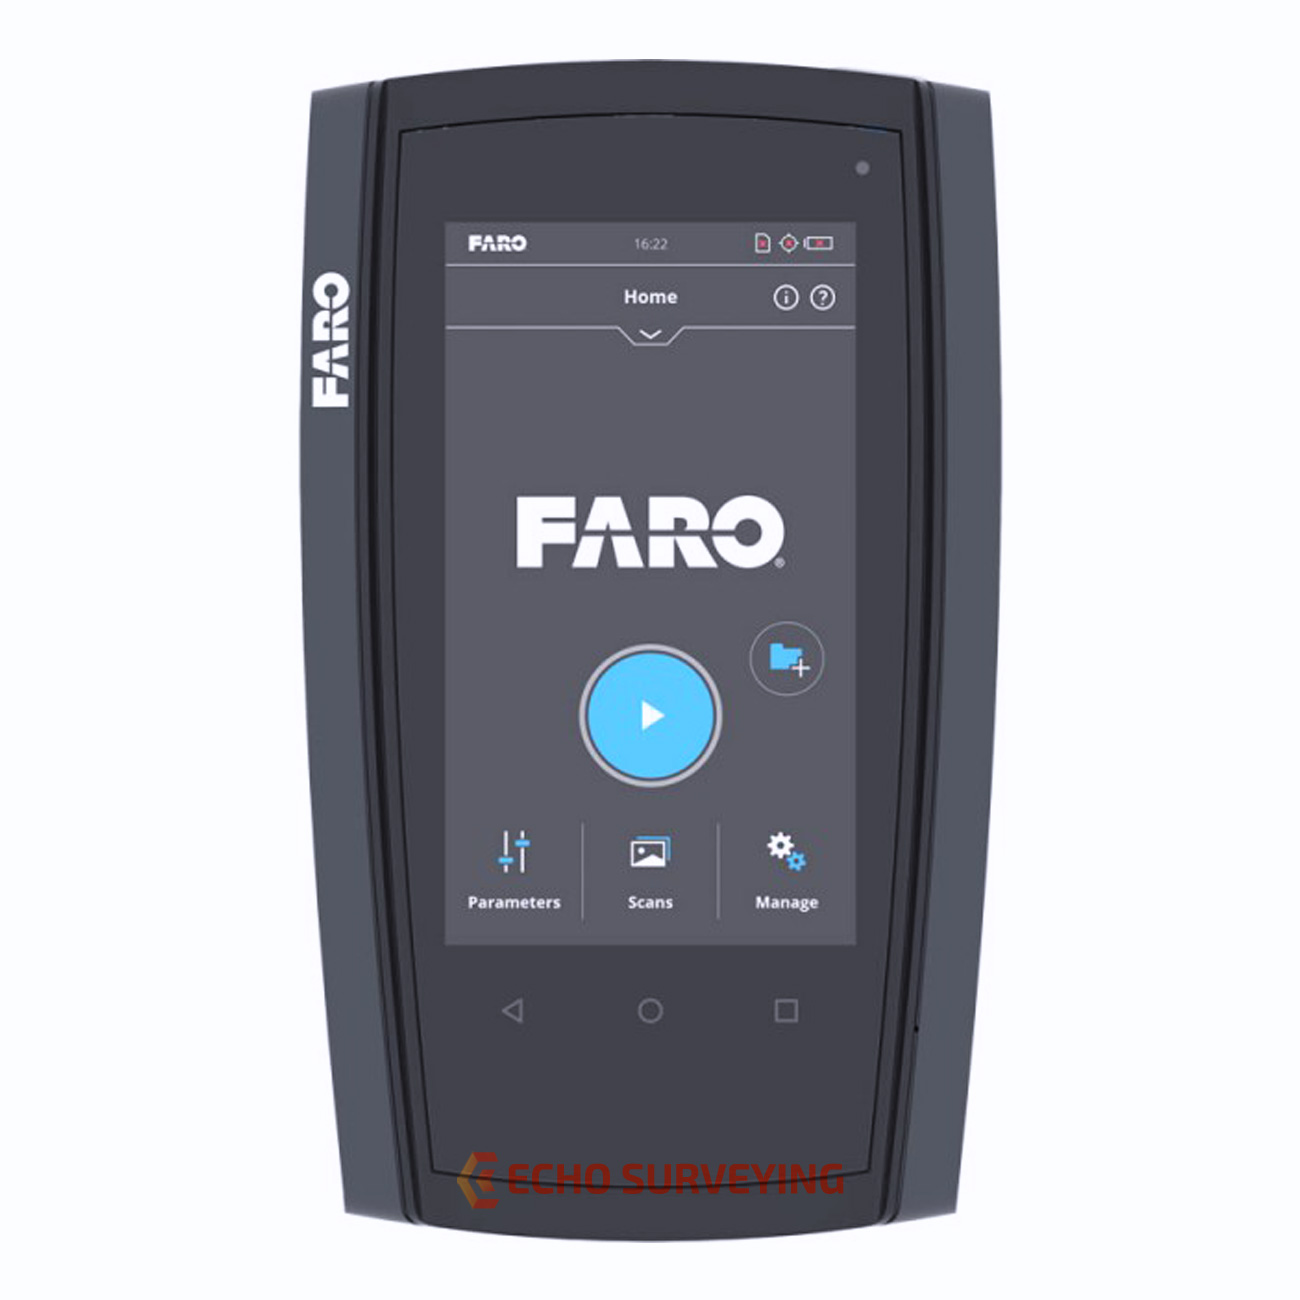 Faro-Focus-S350-price.jpg